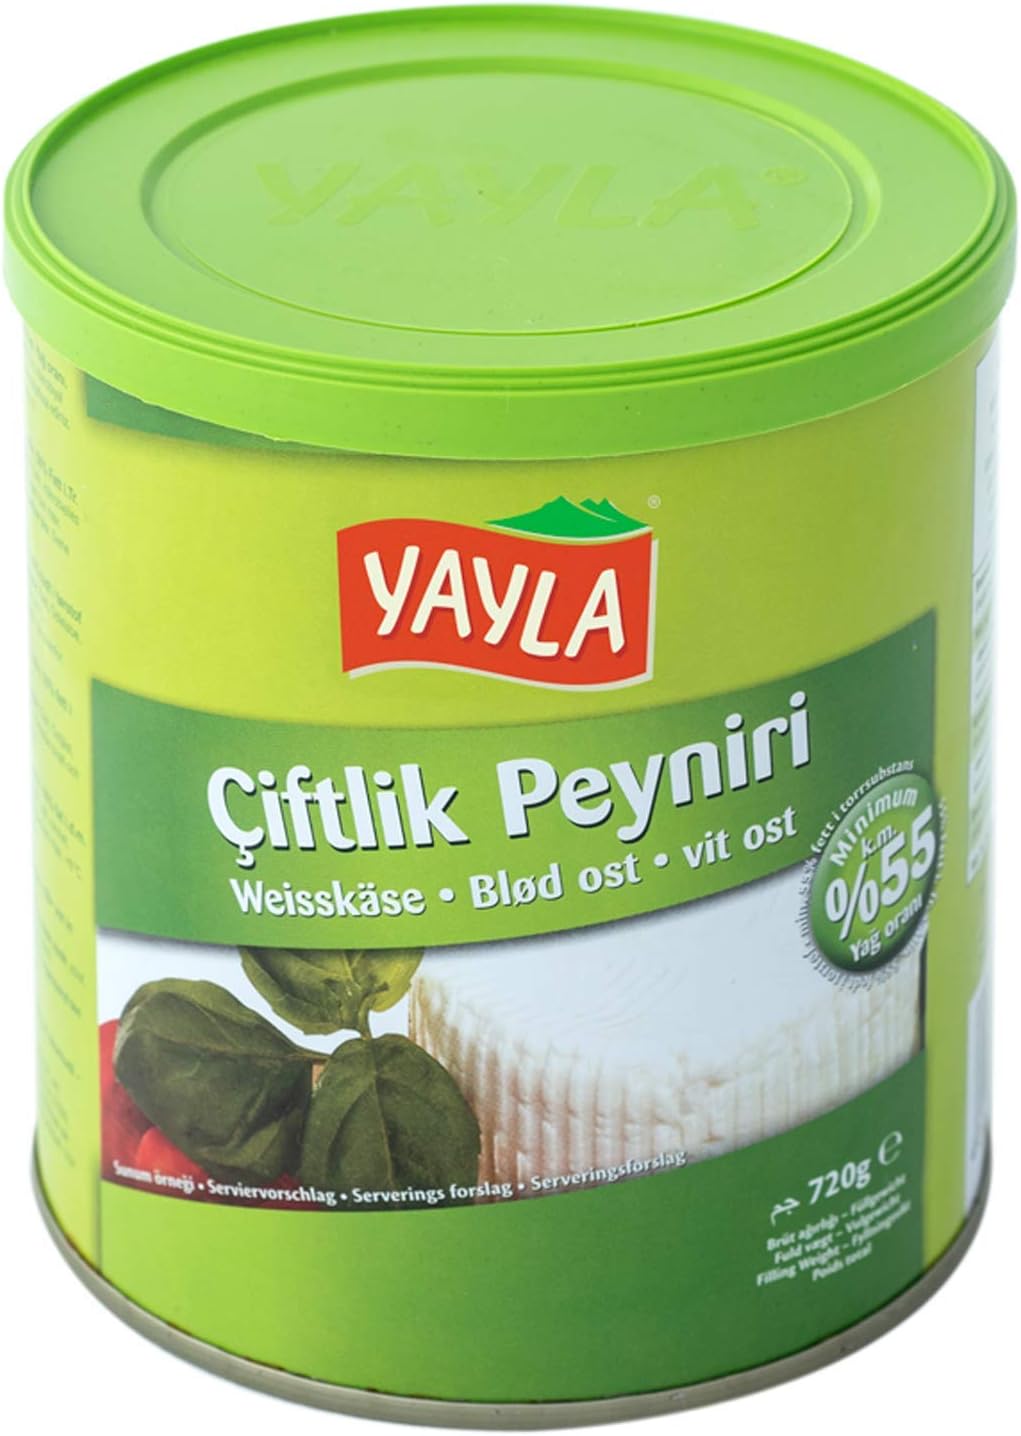 Yayla White Cheese 55% Fat - Ciftlik Peyniri 400gr